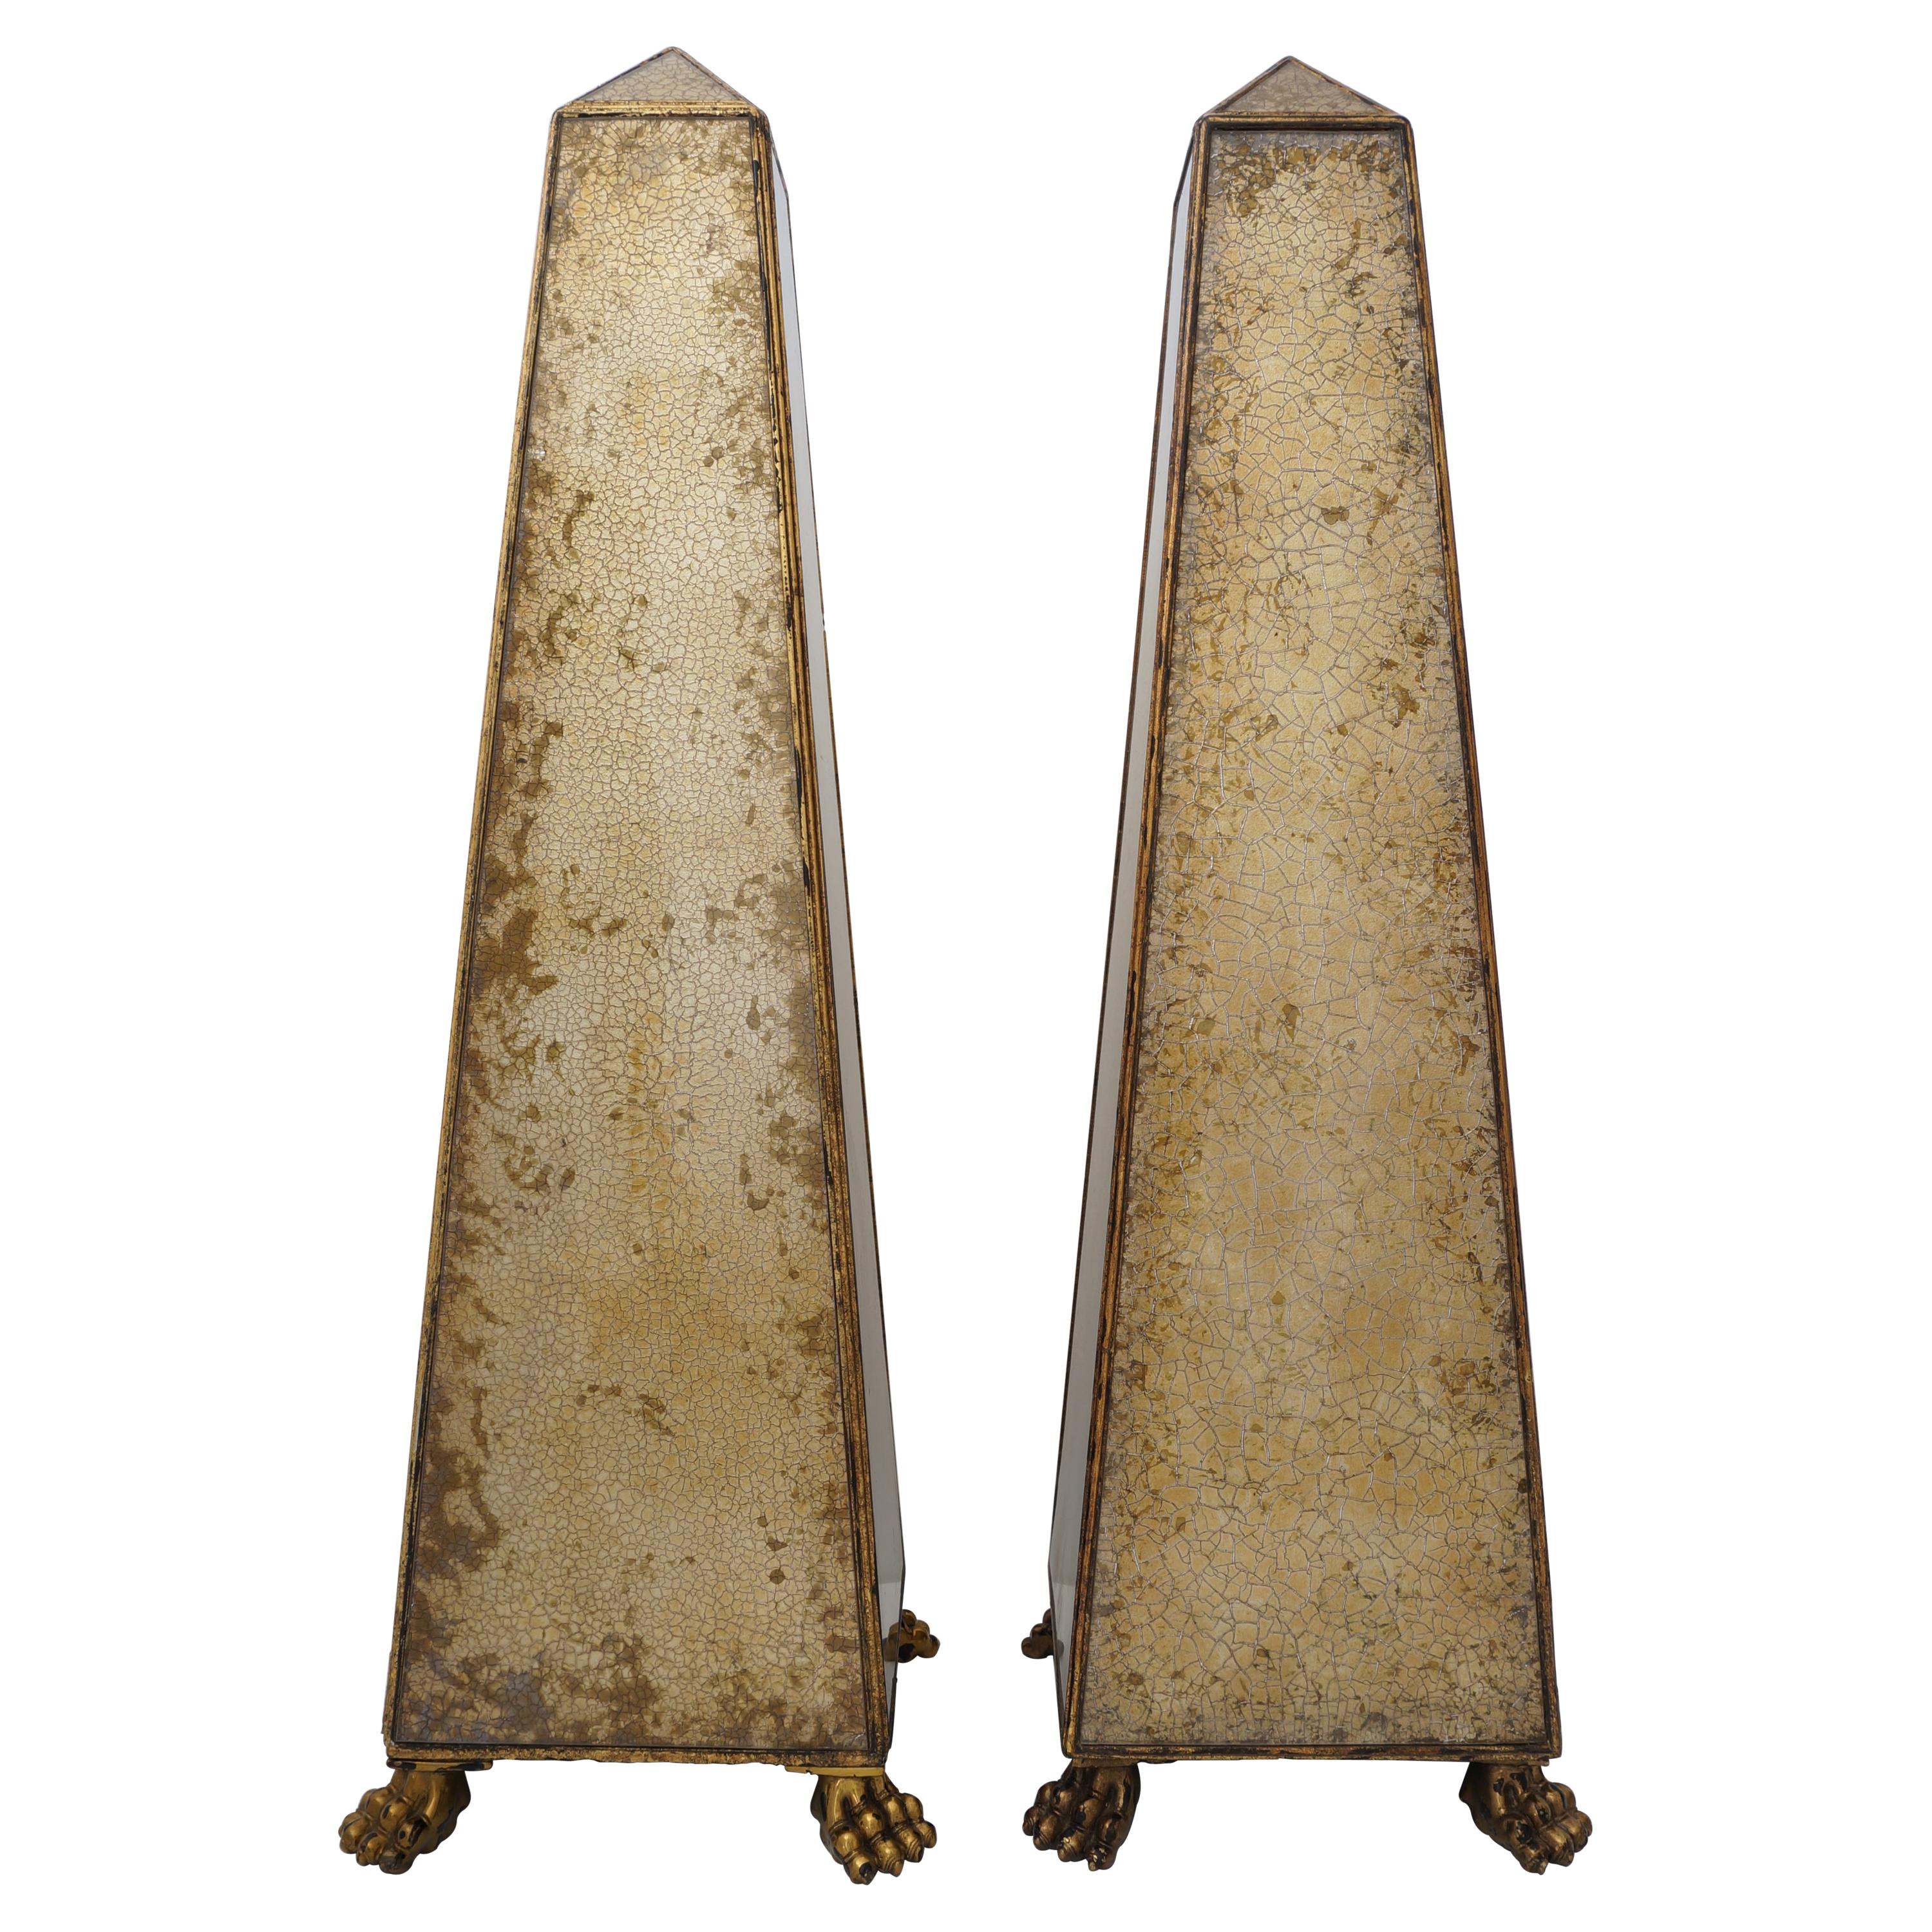 Pair of Maitland Smith Attributed Églomisé Obelisks